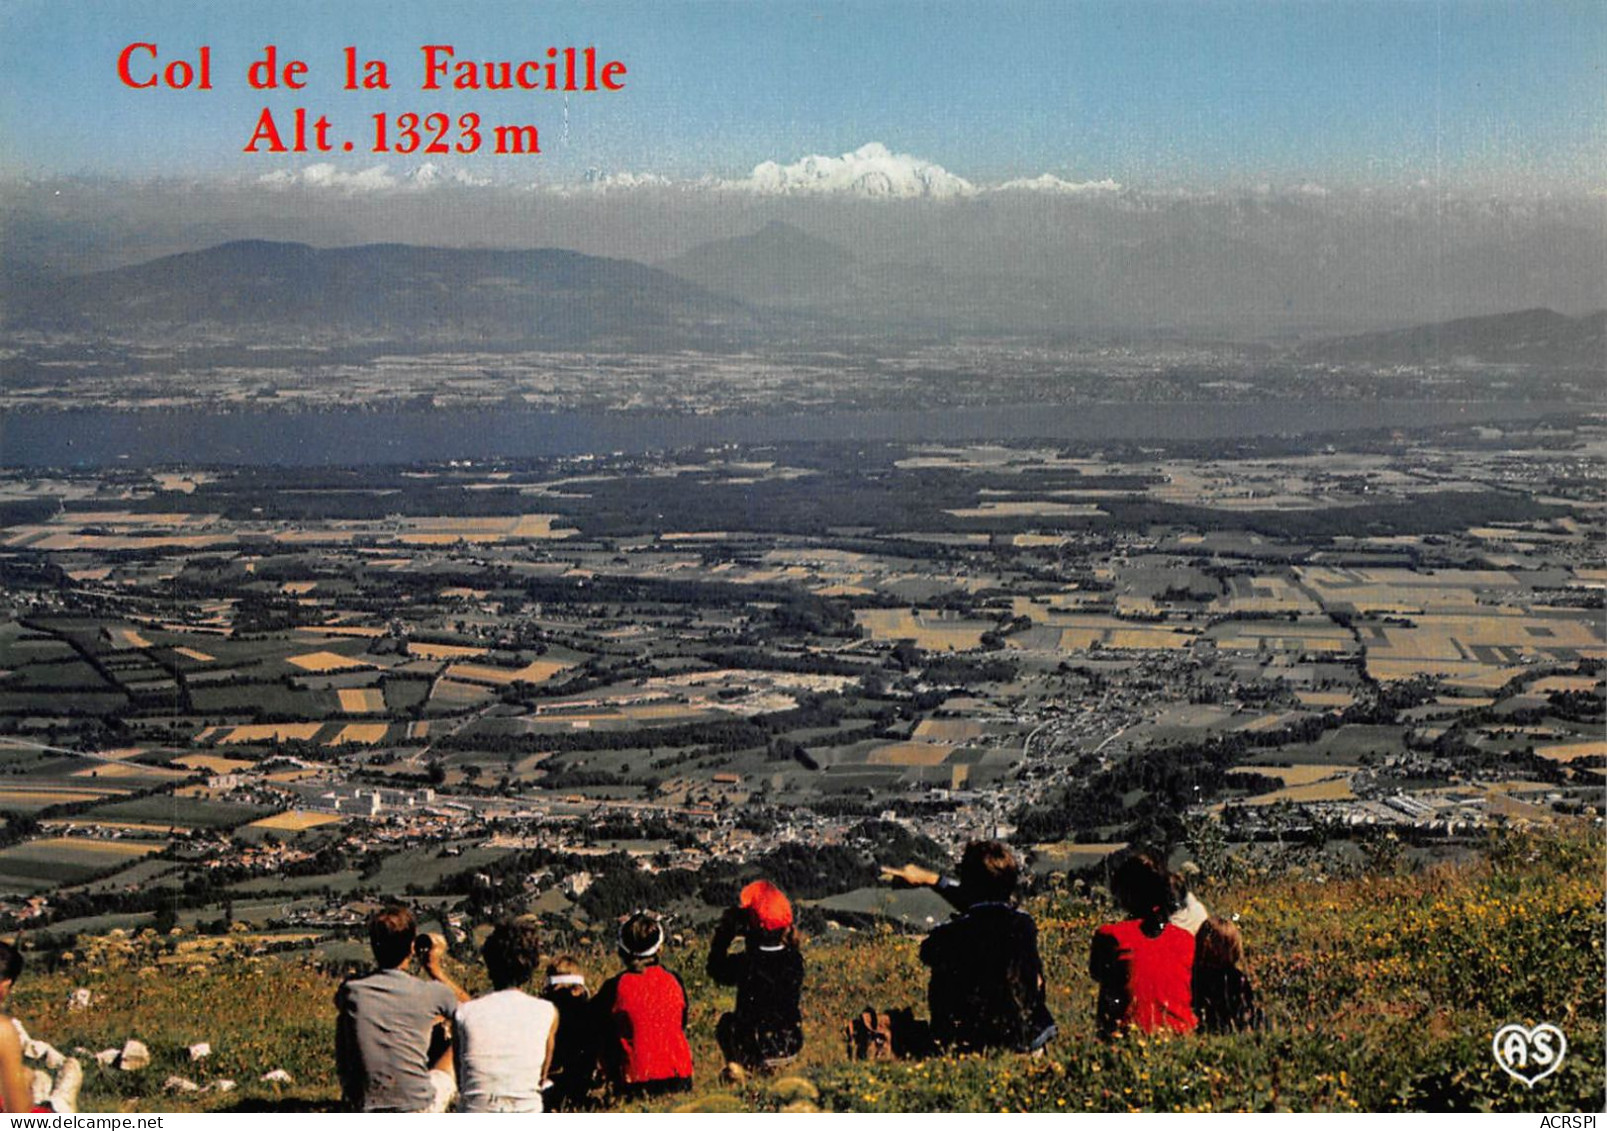 01 Col de la Fauçille lot de 24 cartes-postales          GEX      (Scan R/V) N°   1   \OA1051